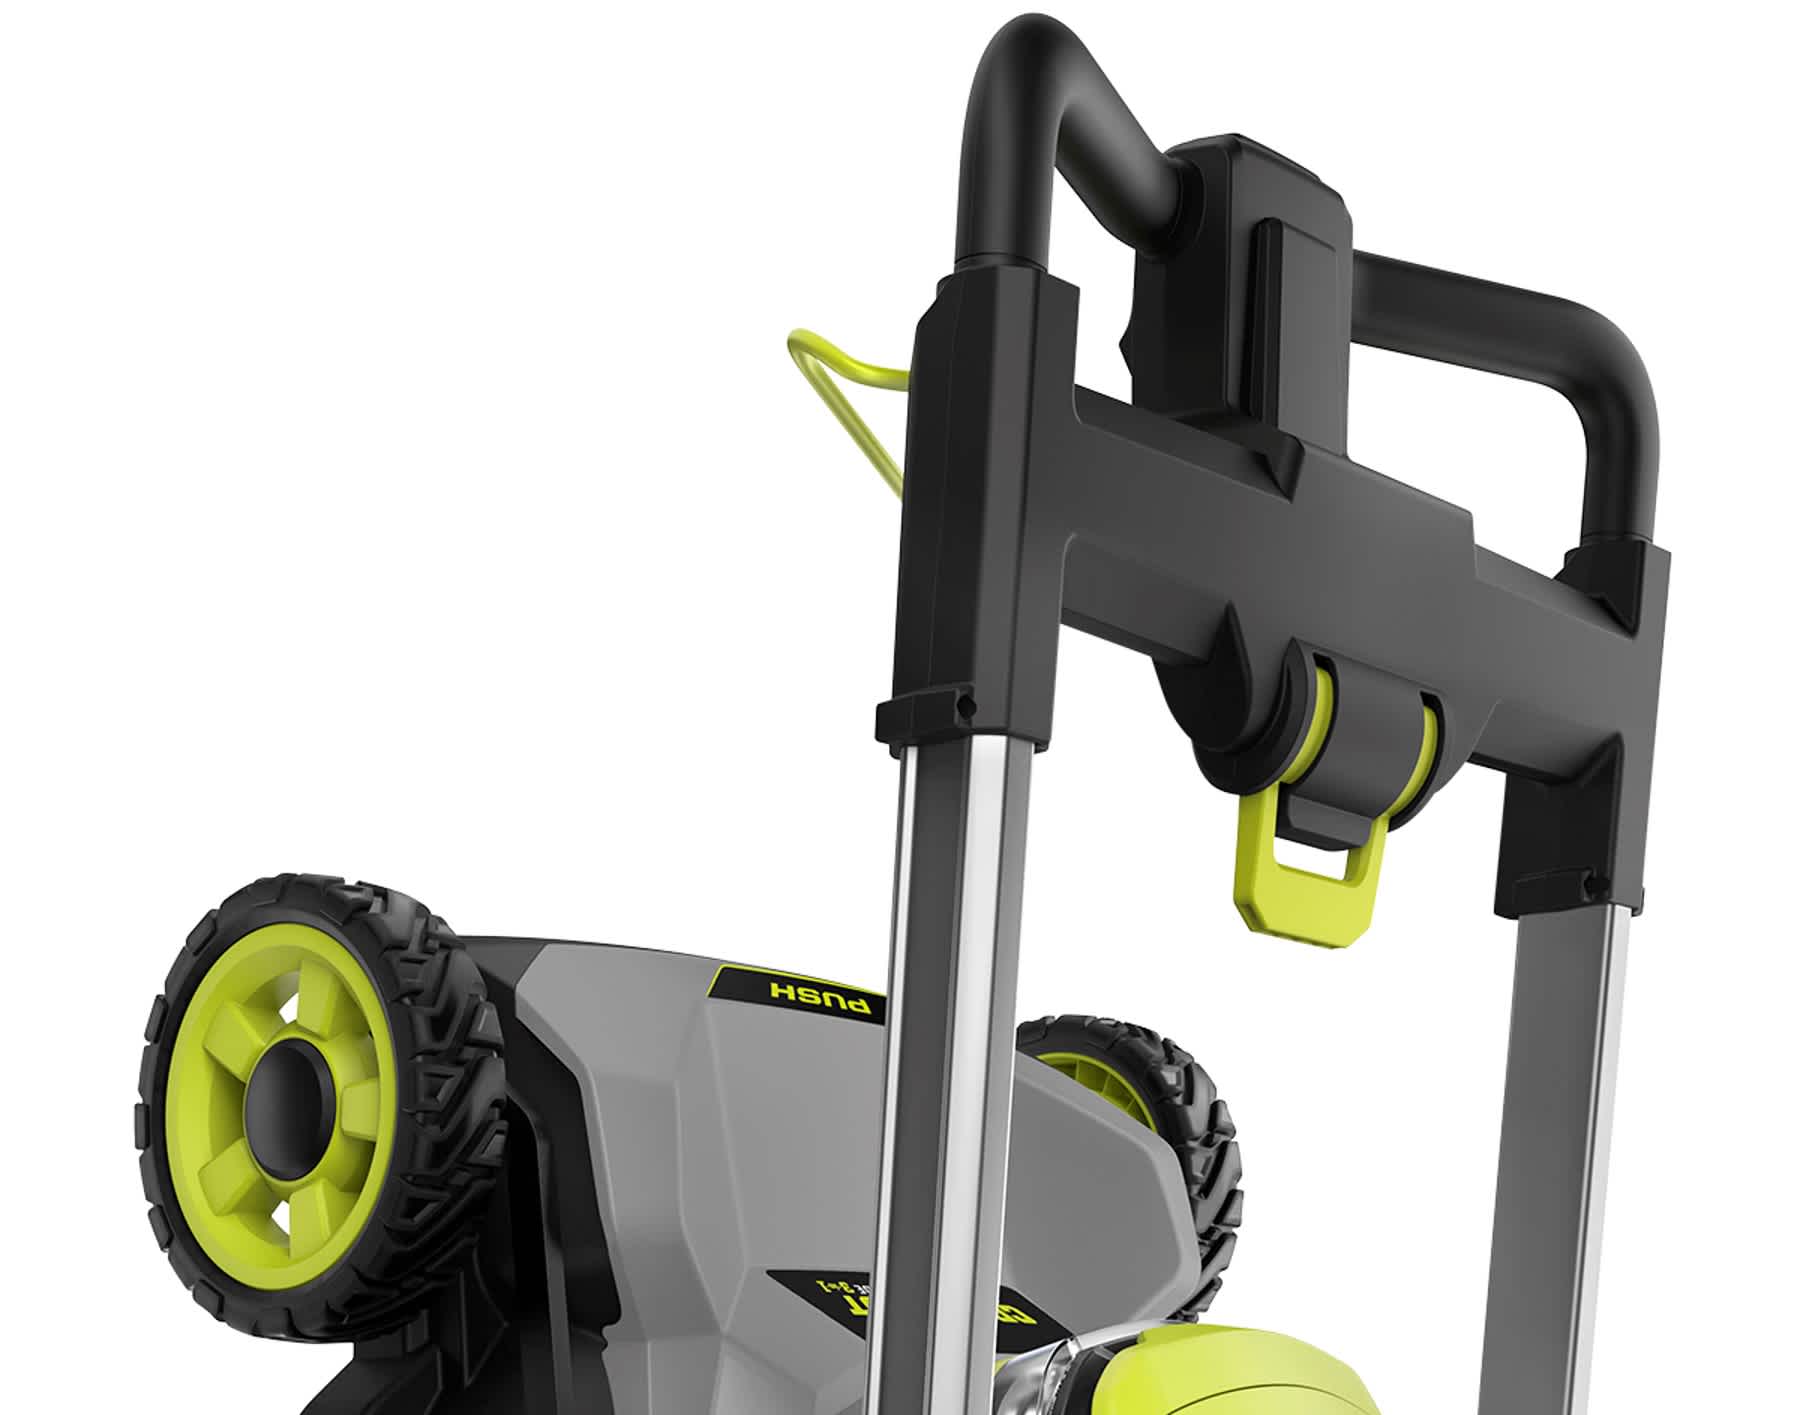  HOMELITE RYOBI 996516001 Genuine Blade Mulching Mower Replaces  Also Used ON RIDGID Troy-BILT Echo Powerstroke Workforce BLACKMAX : Patio,  Lawn & Garden